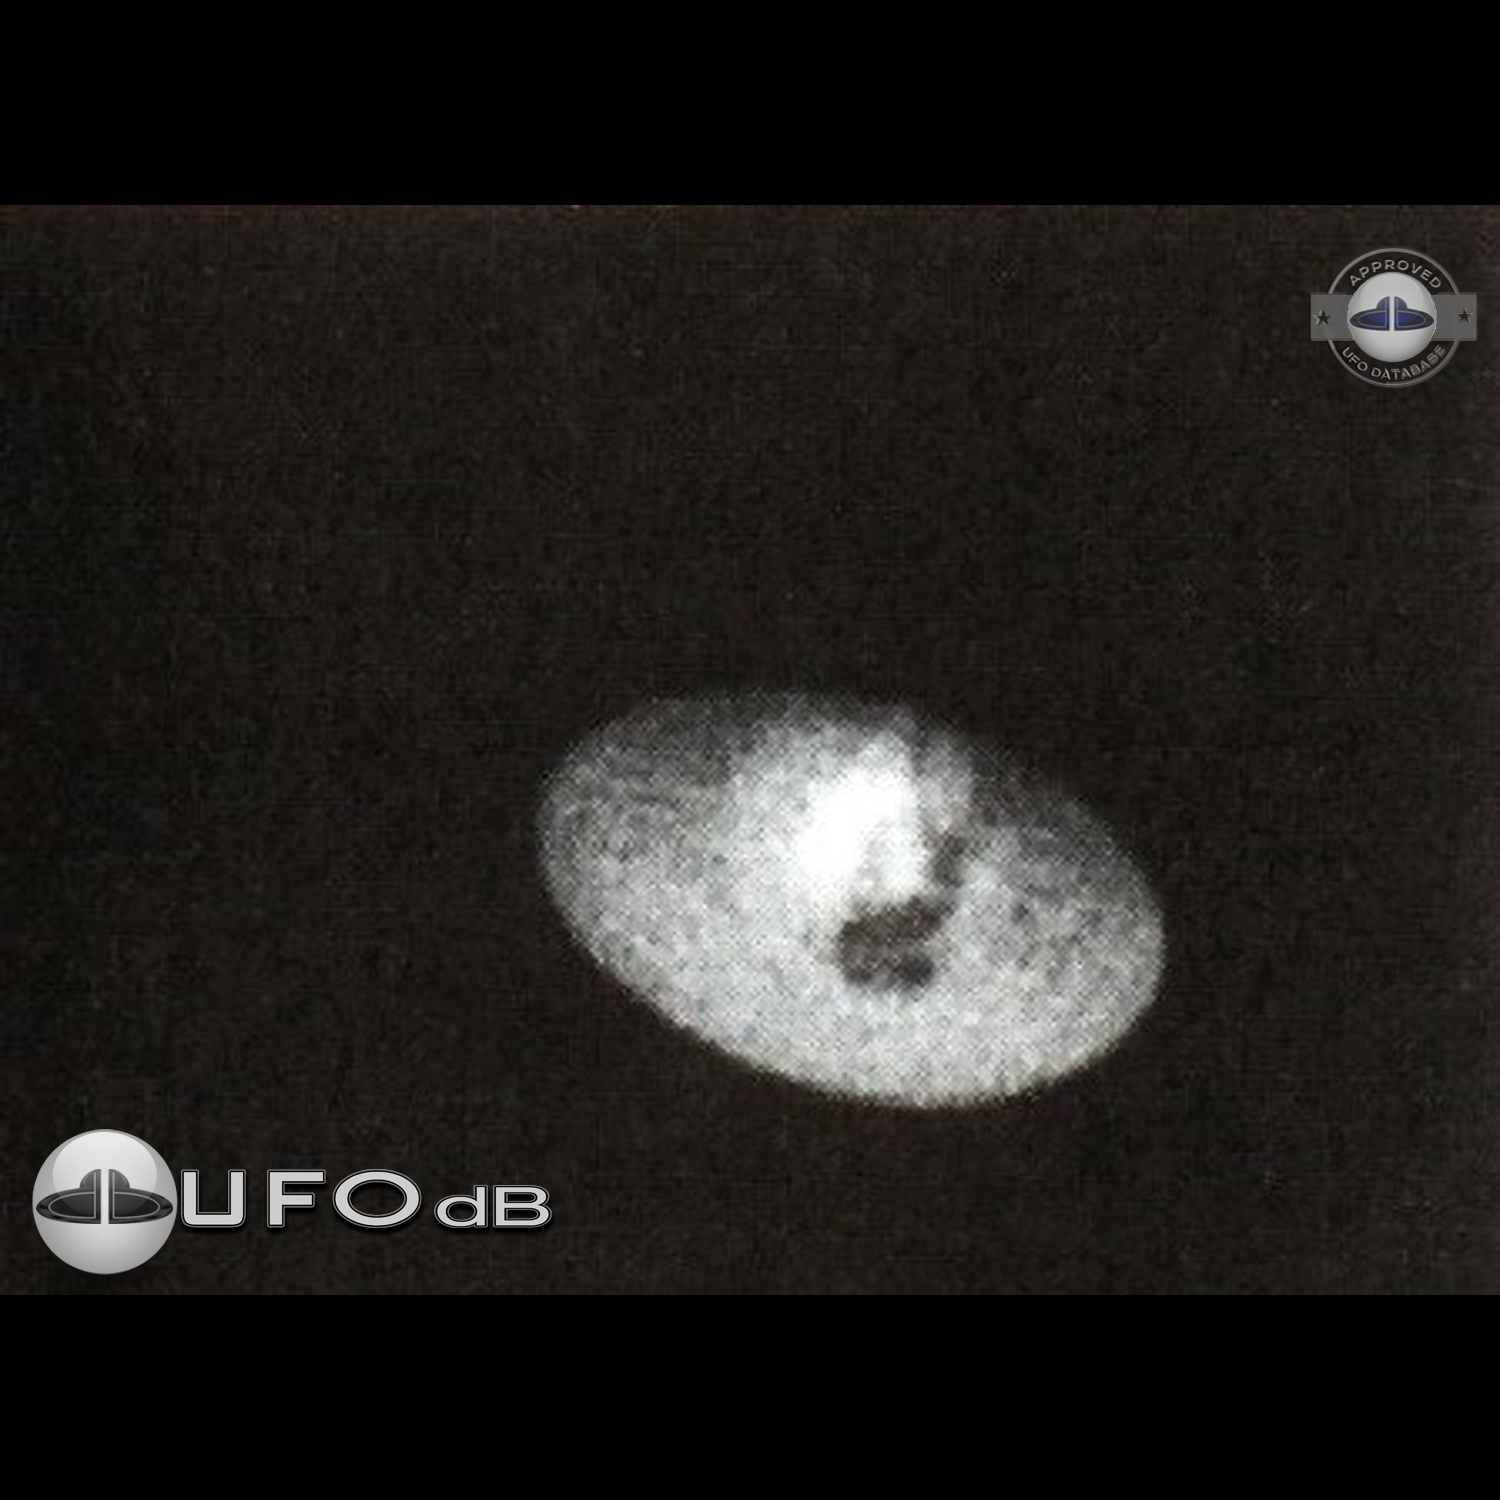 Yaroslavl, Russia | UFO with Saturn Shape | April 1990 | UFO picture UFO Picture #171-1